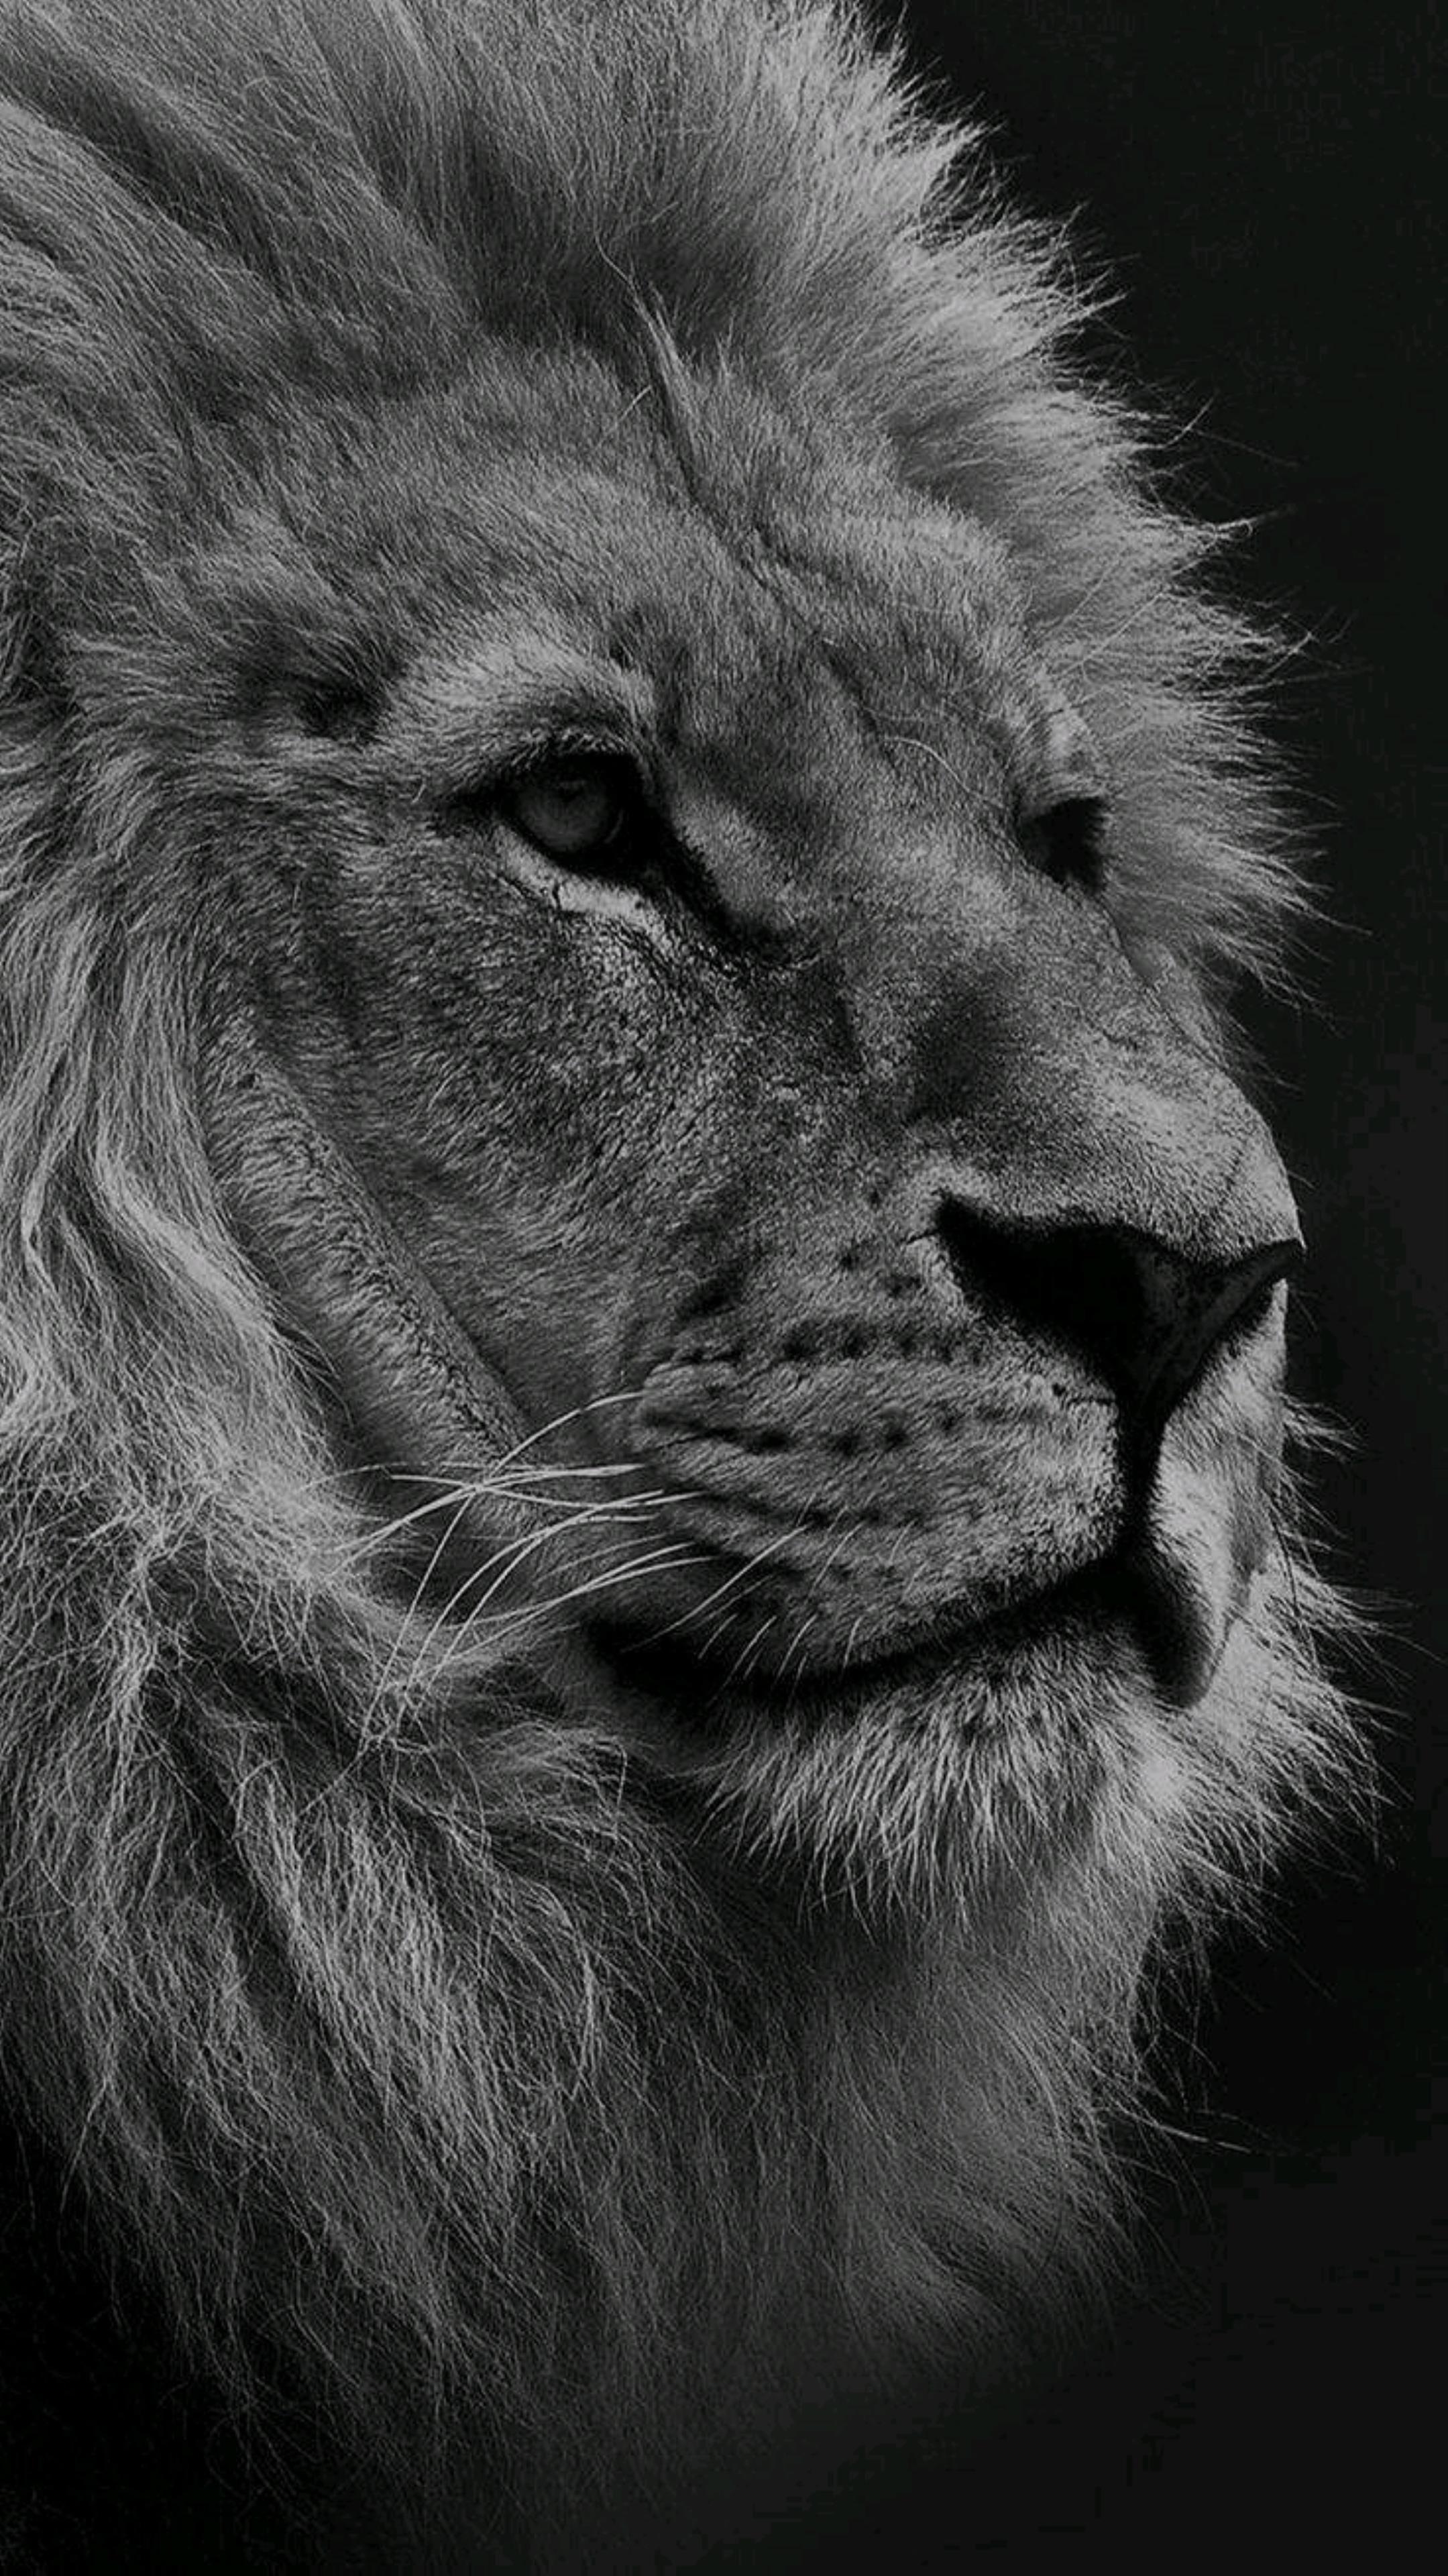 AMOLED Animal Wallpaper. Lion wallpaper, Android wallpaper